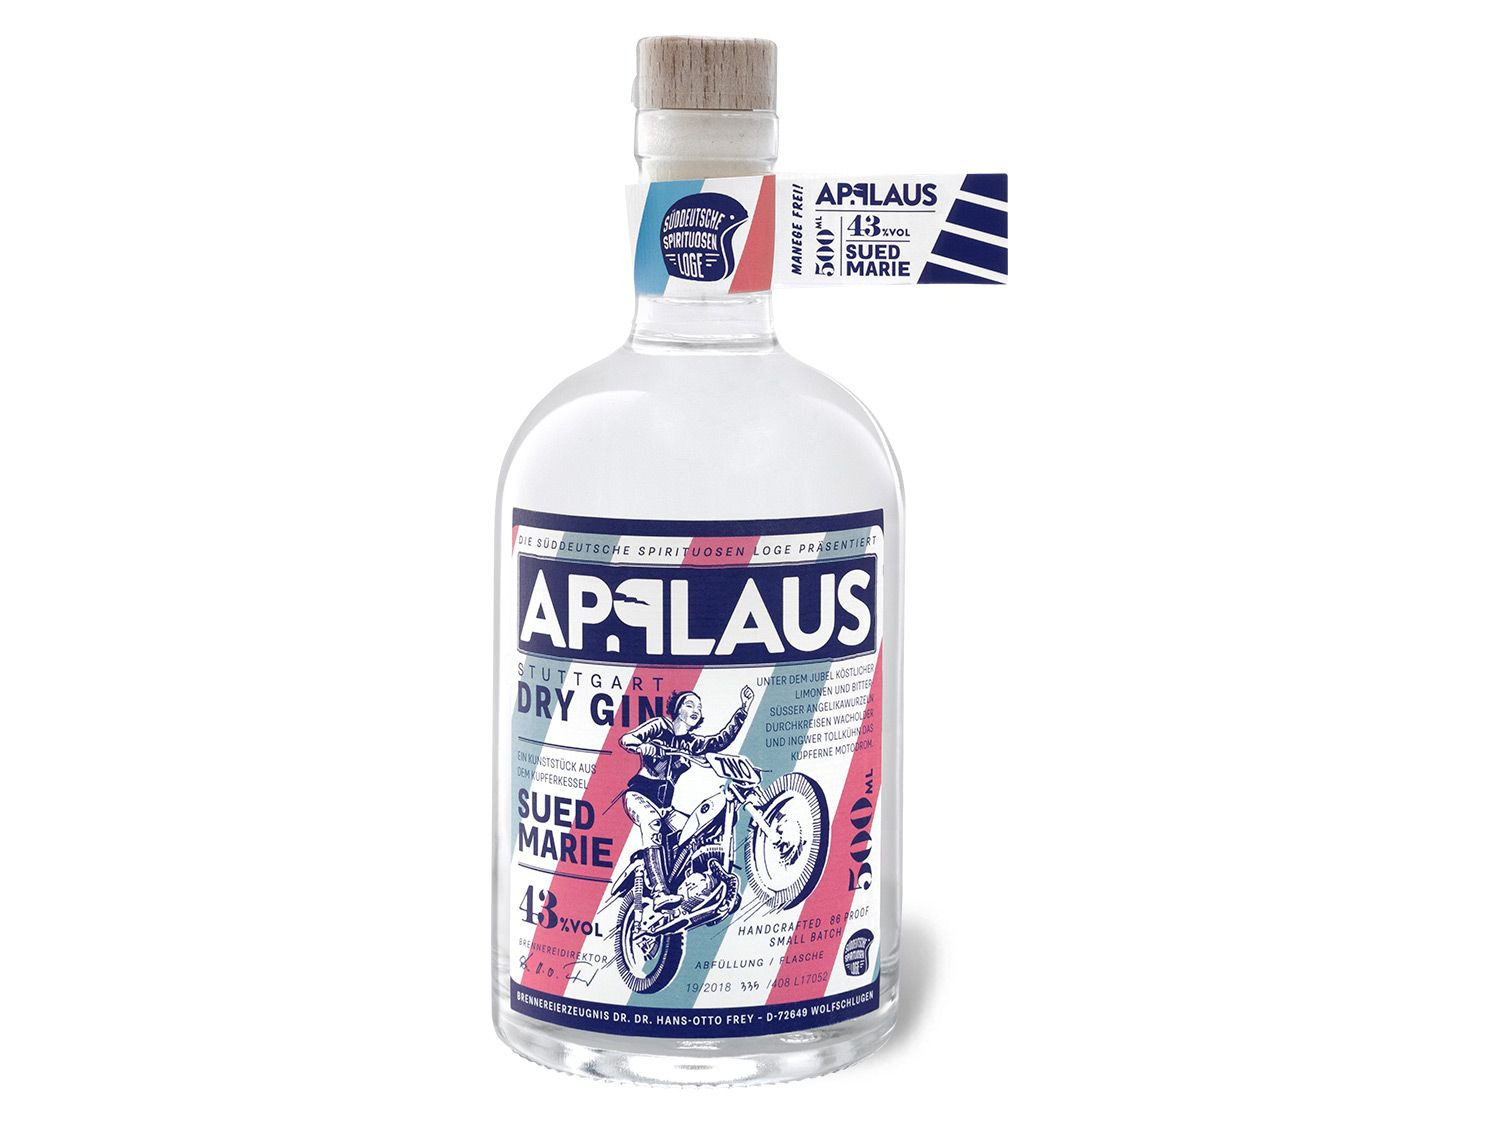 Applaus Dry Gin Suedmarie 43% | Vol LIDL online kaufen